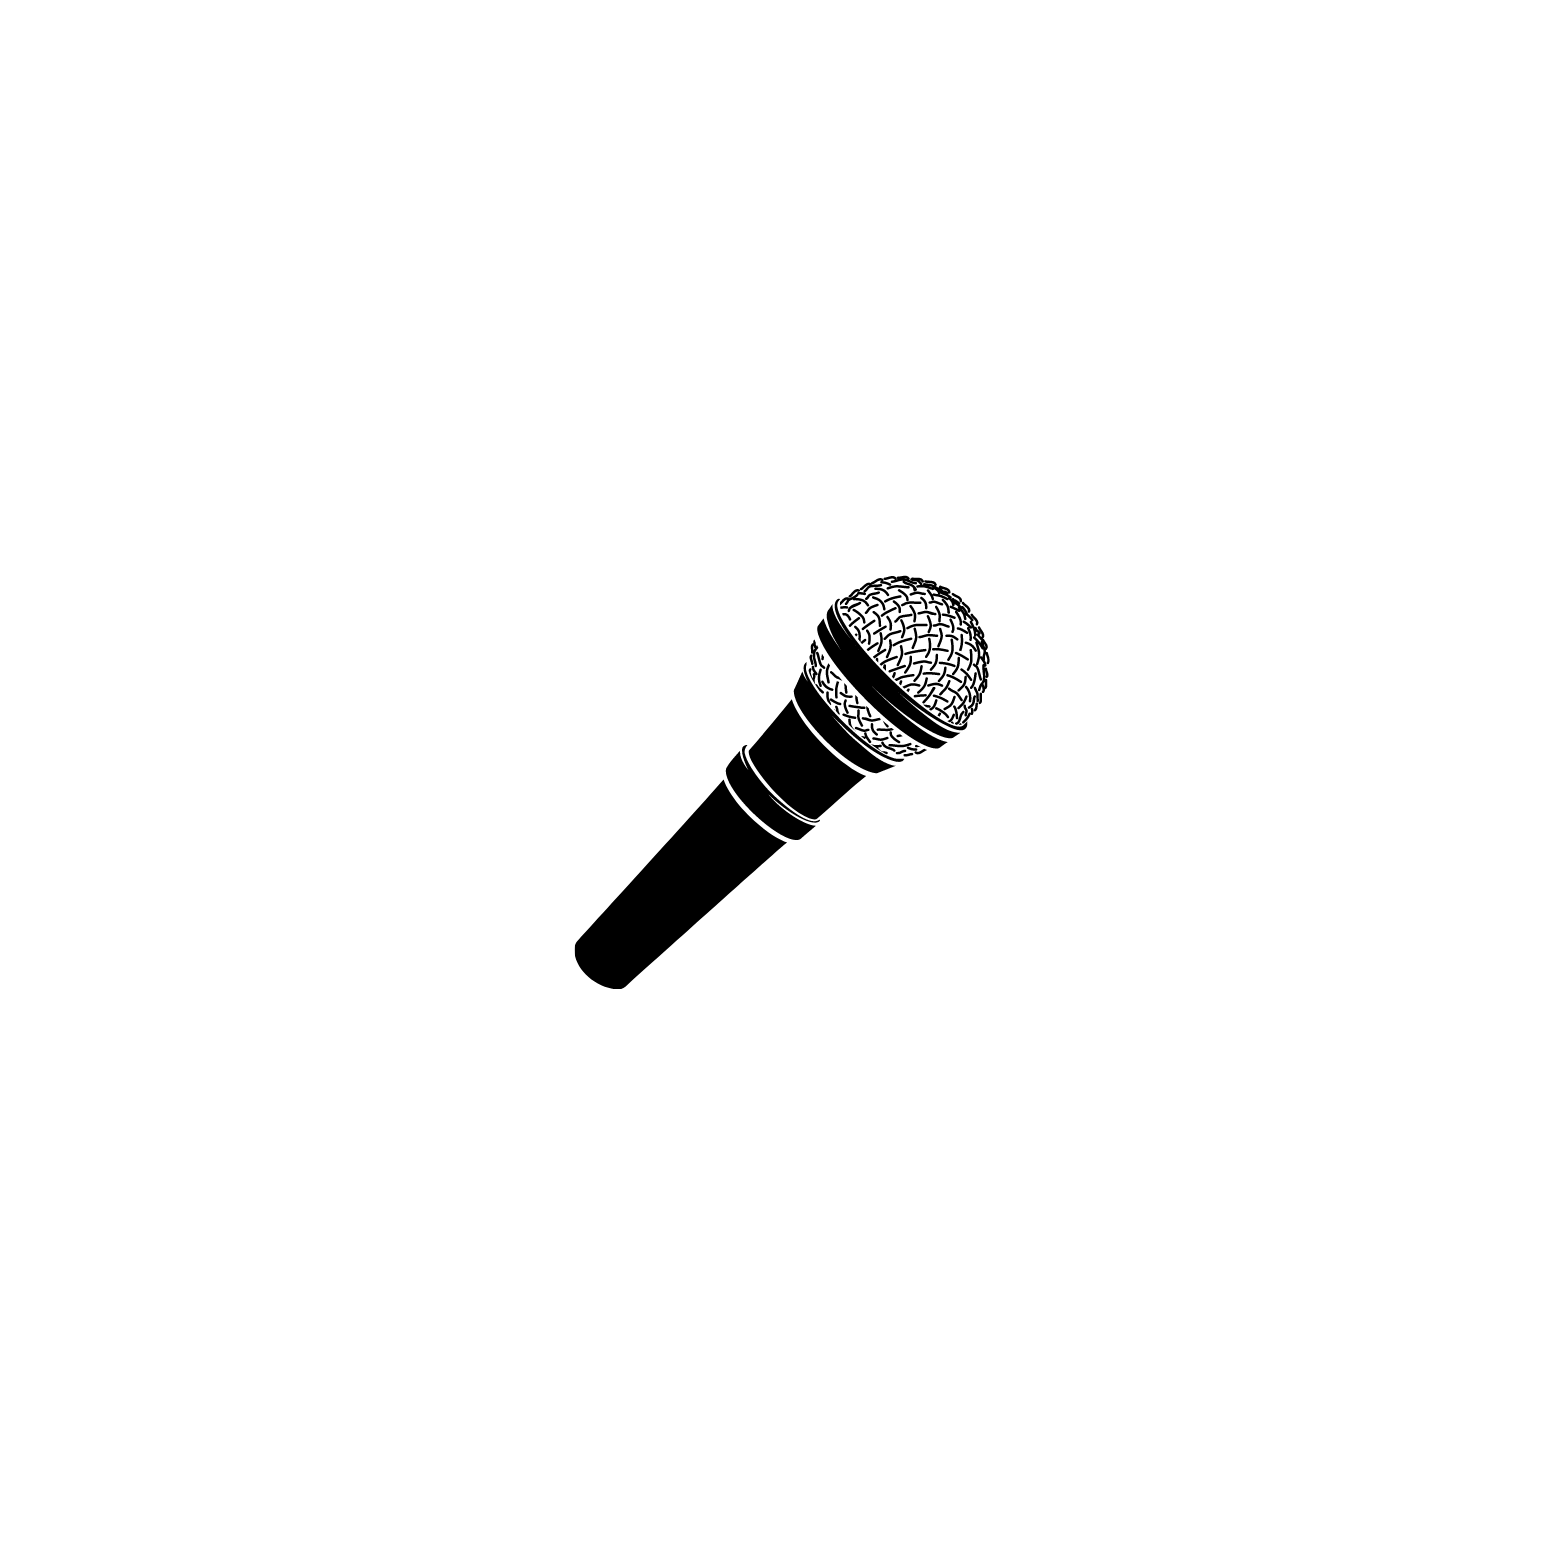 WP Speakers logo